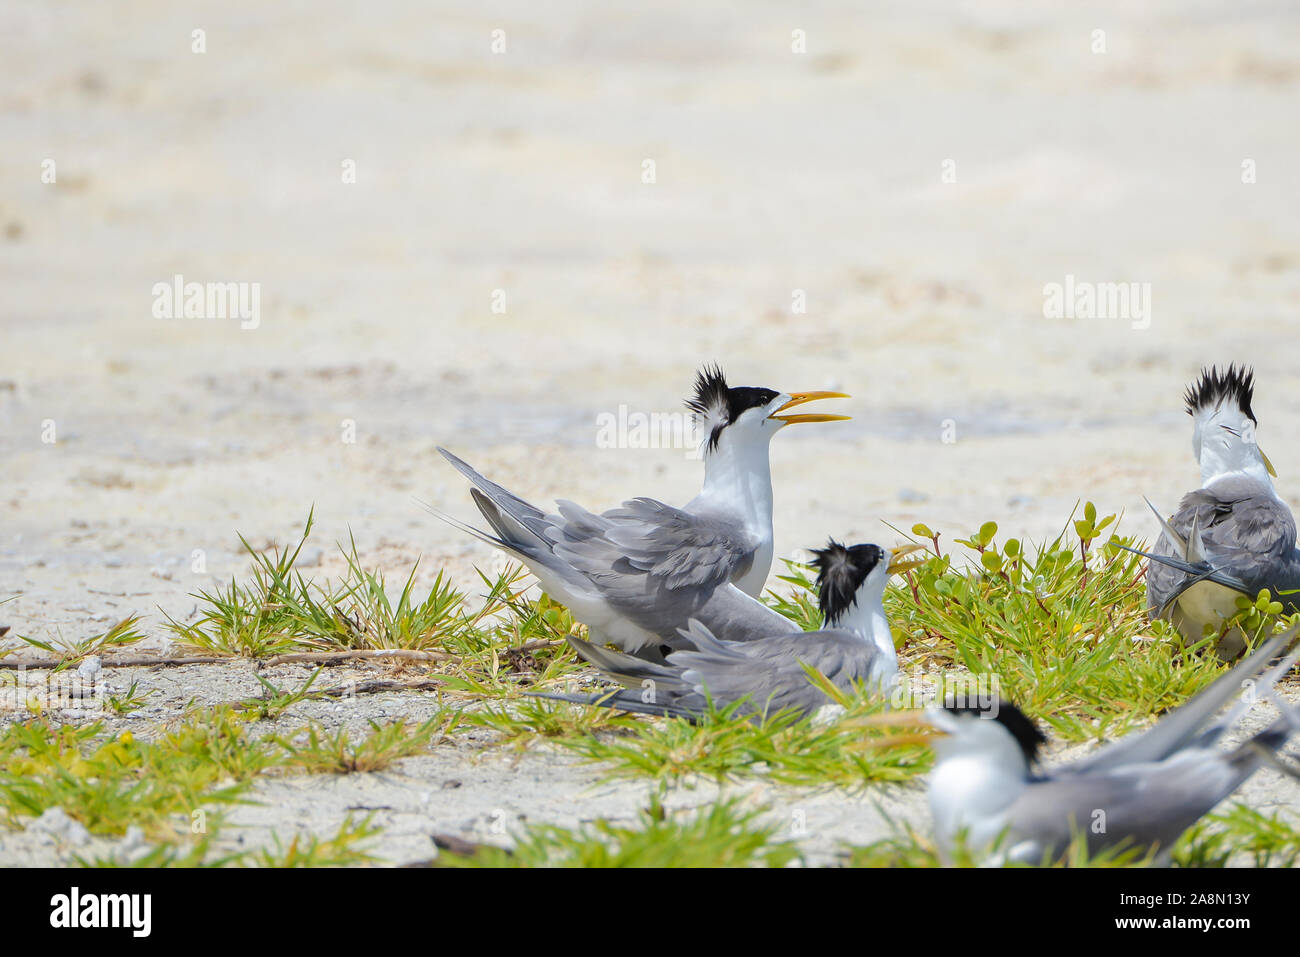 Greater crested tern, sea bird, Polynesia, birds hatching eggs Stock Photo